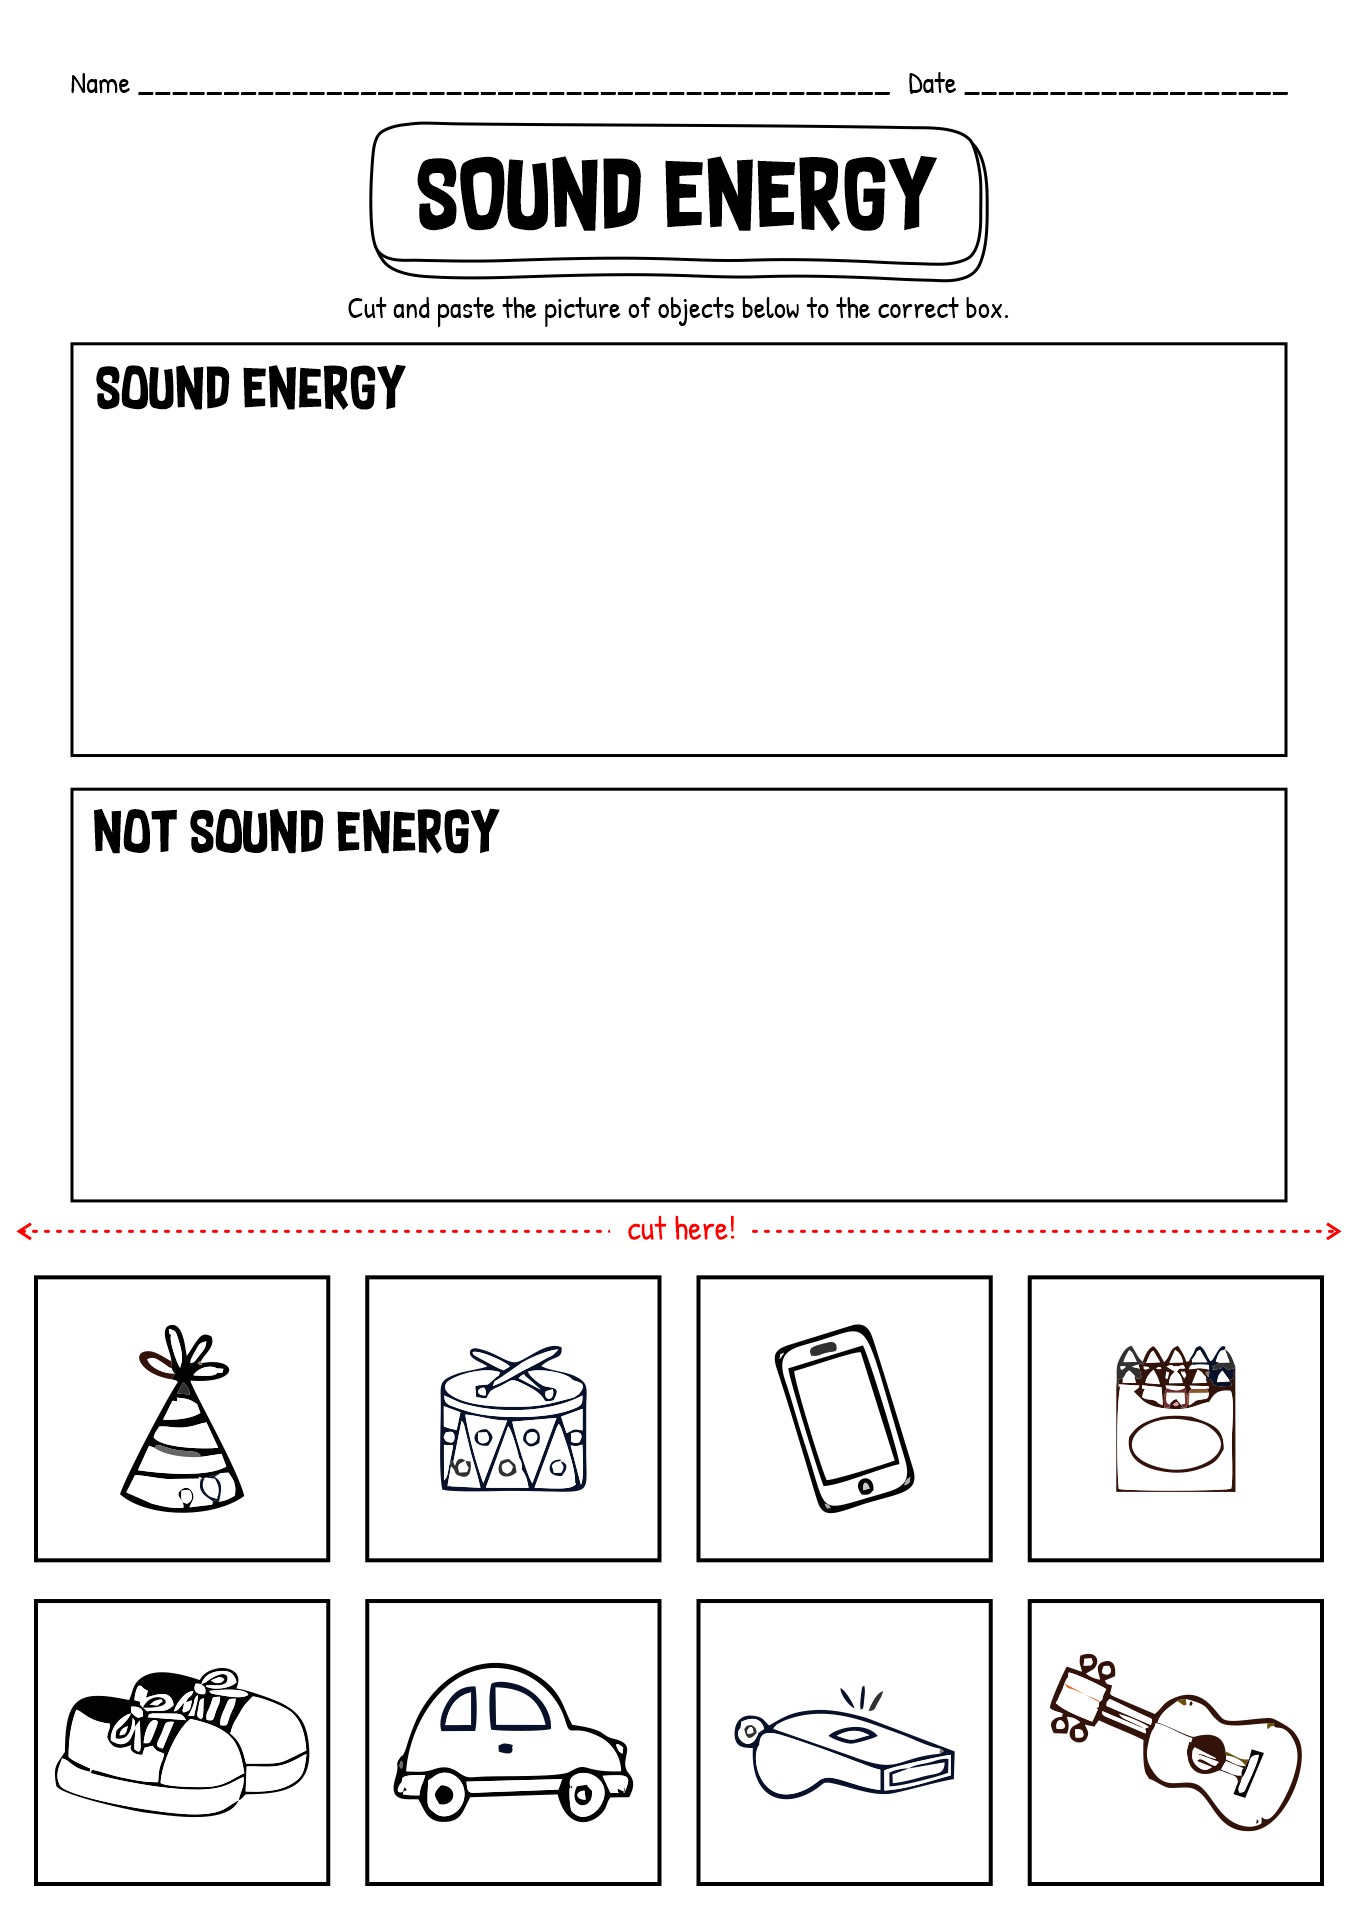 Sound Energy Worksheet Kindergarten Image